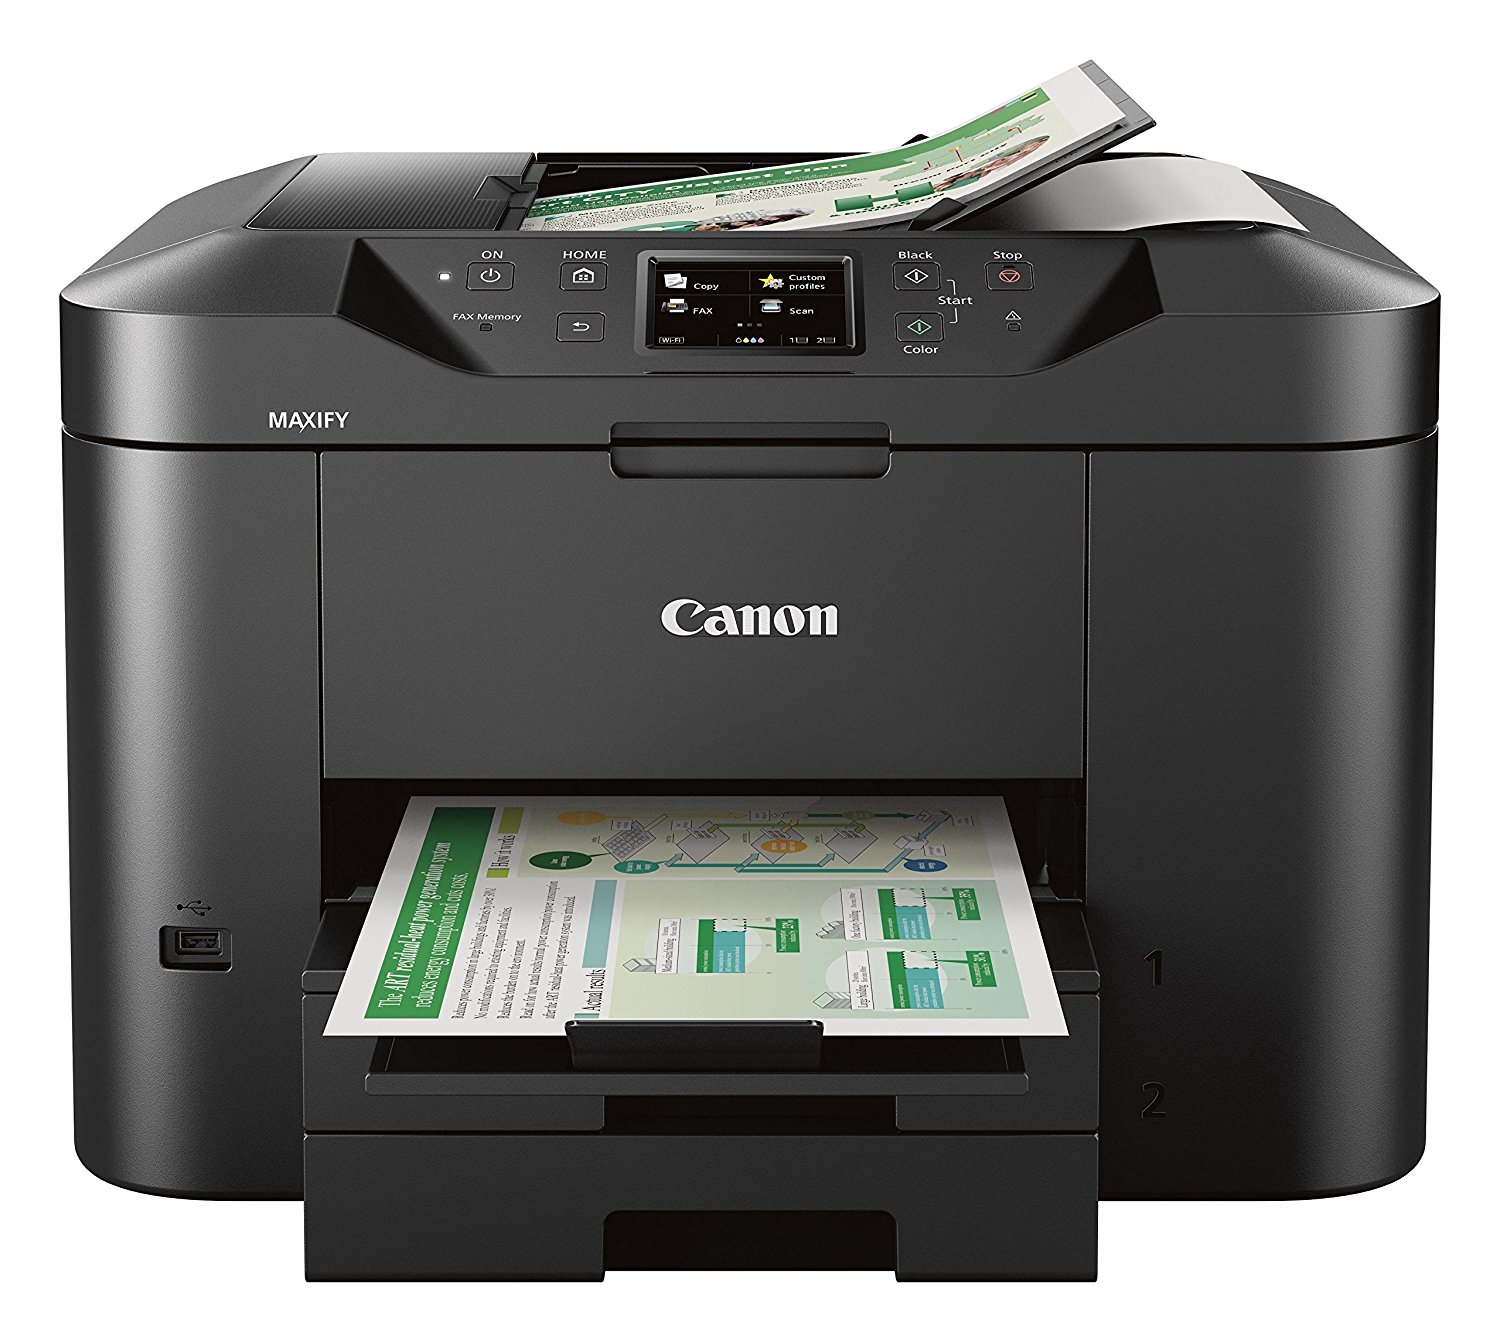 duplex printing setup on canon mx532